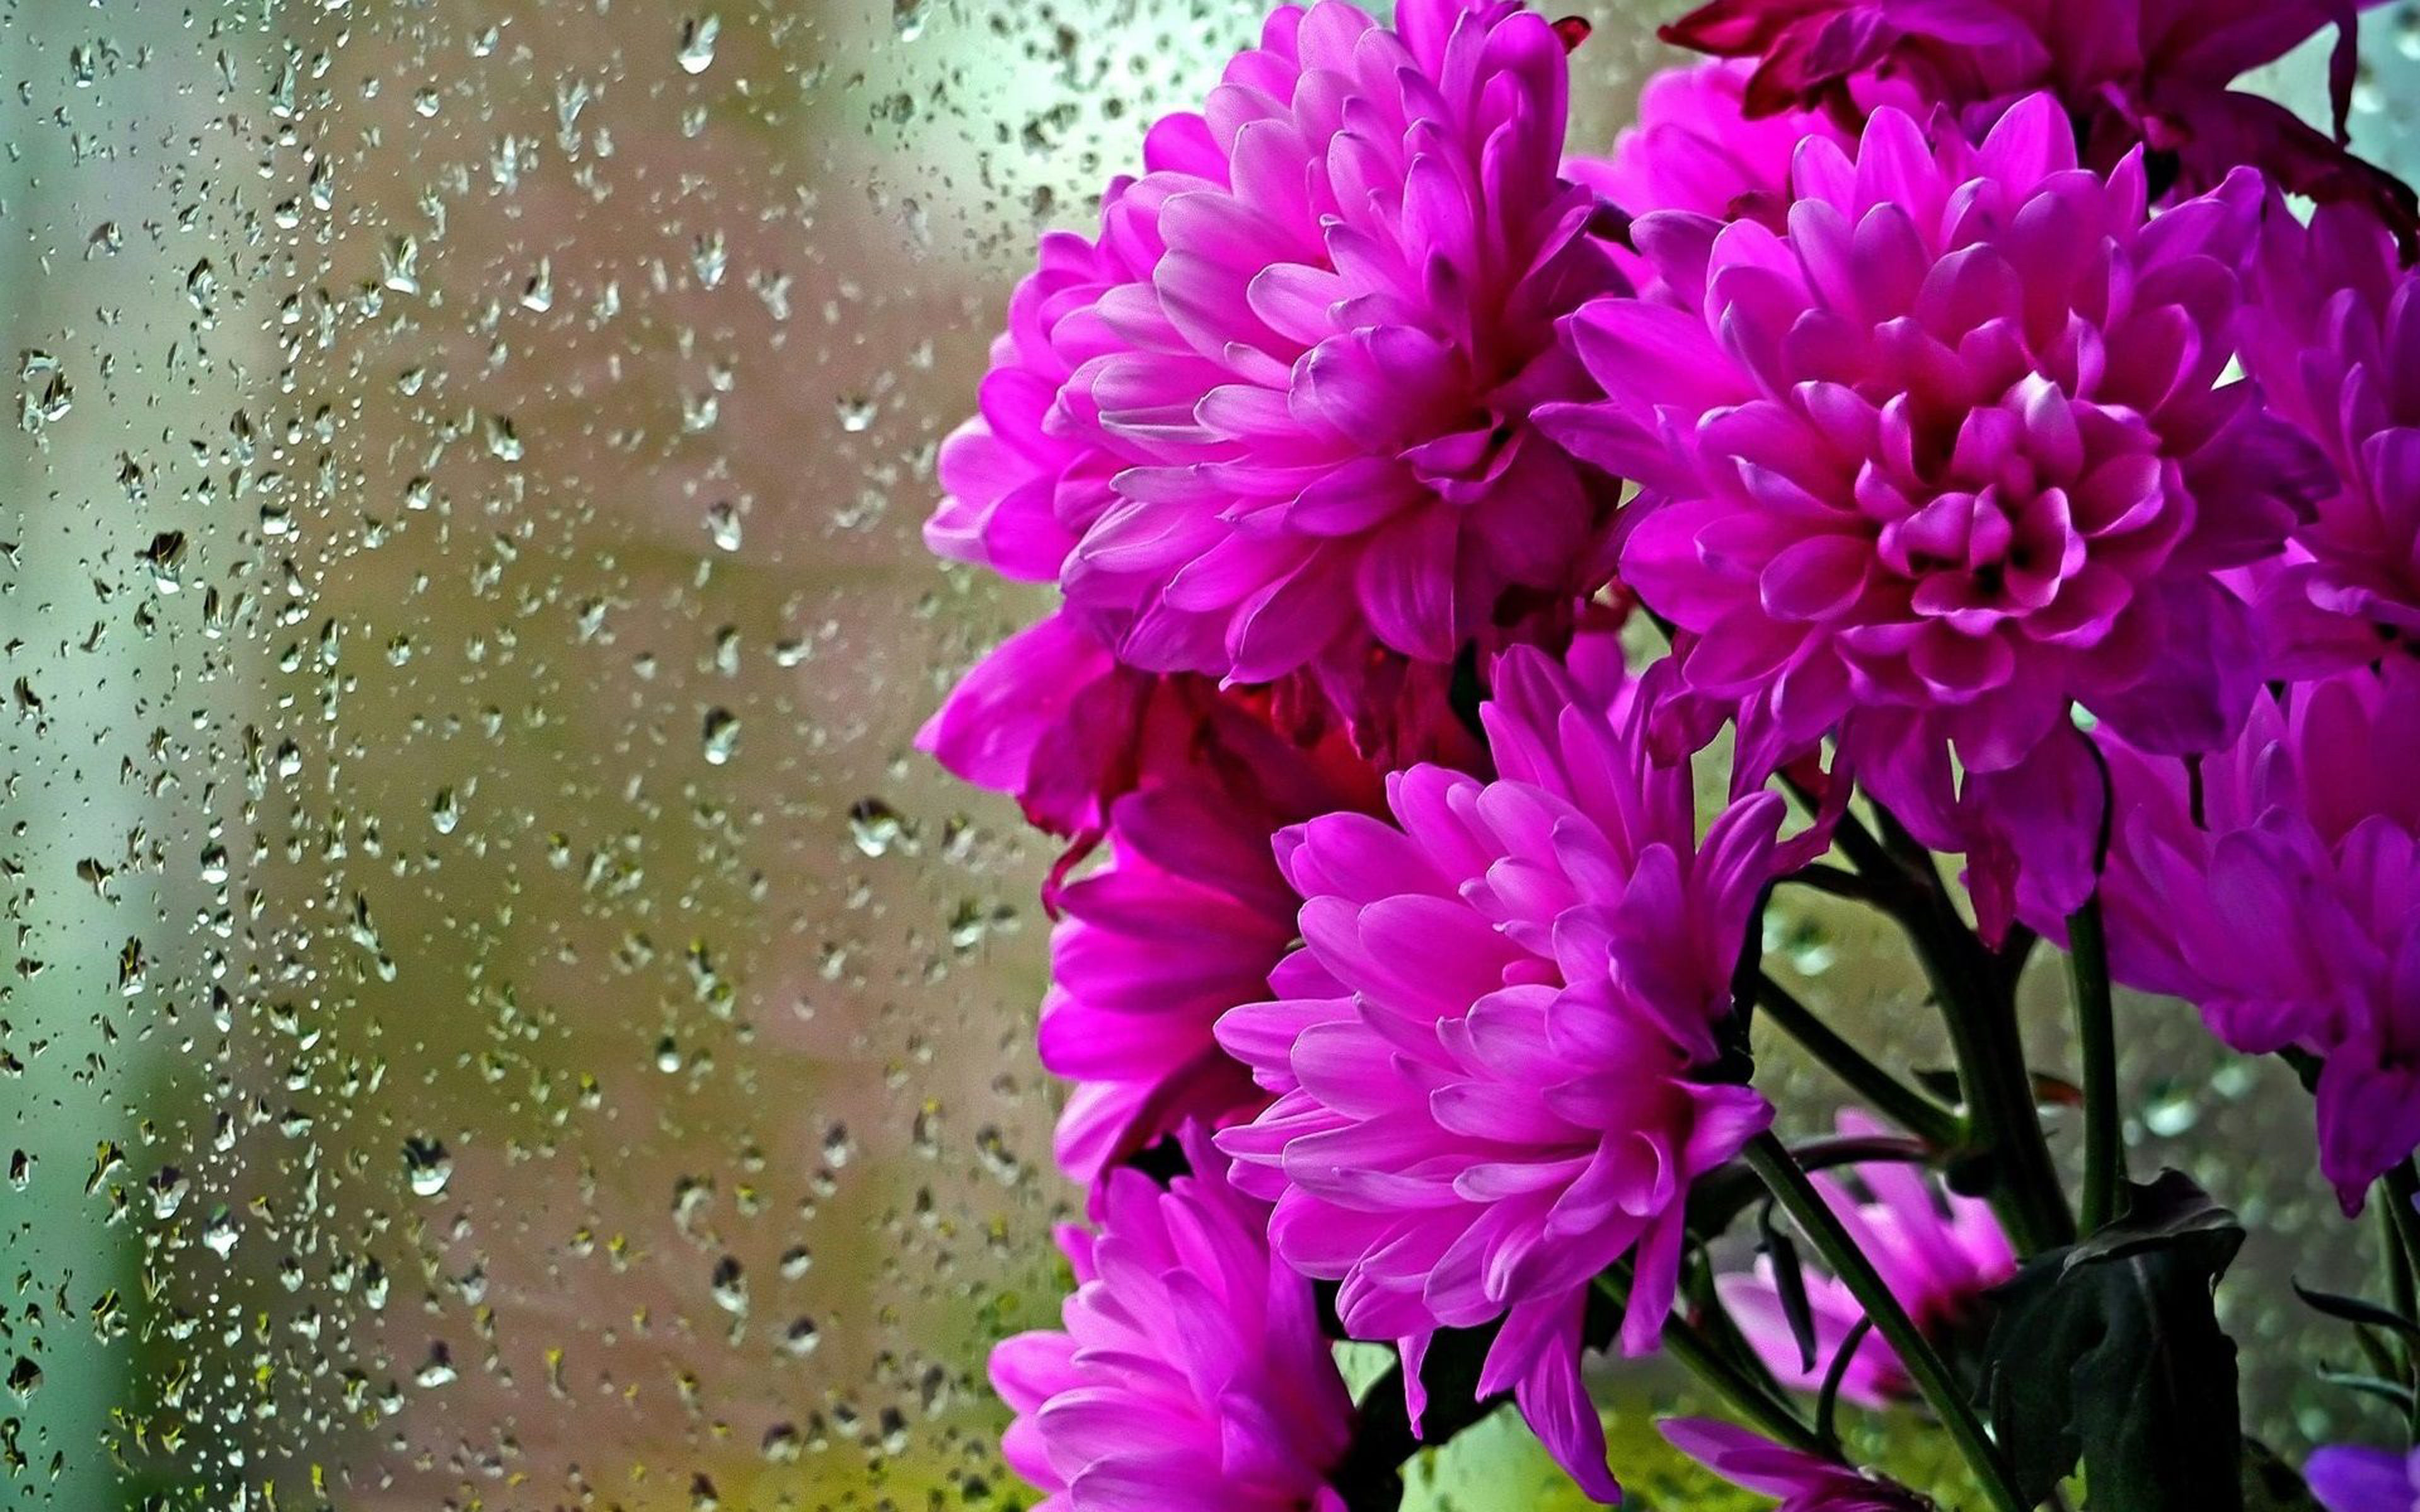 Purple Flowers Chrysanthemums Glass Drops Water Rain Hd Wallpapers For